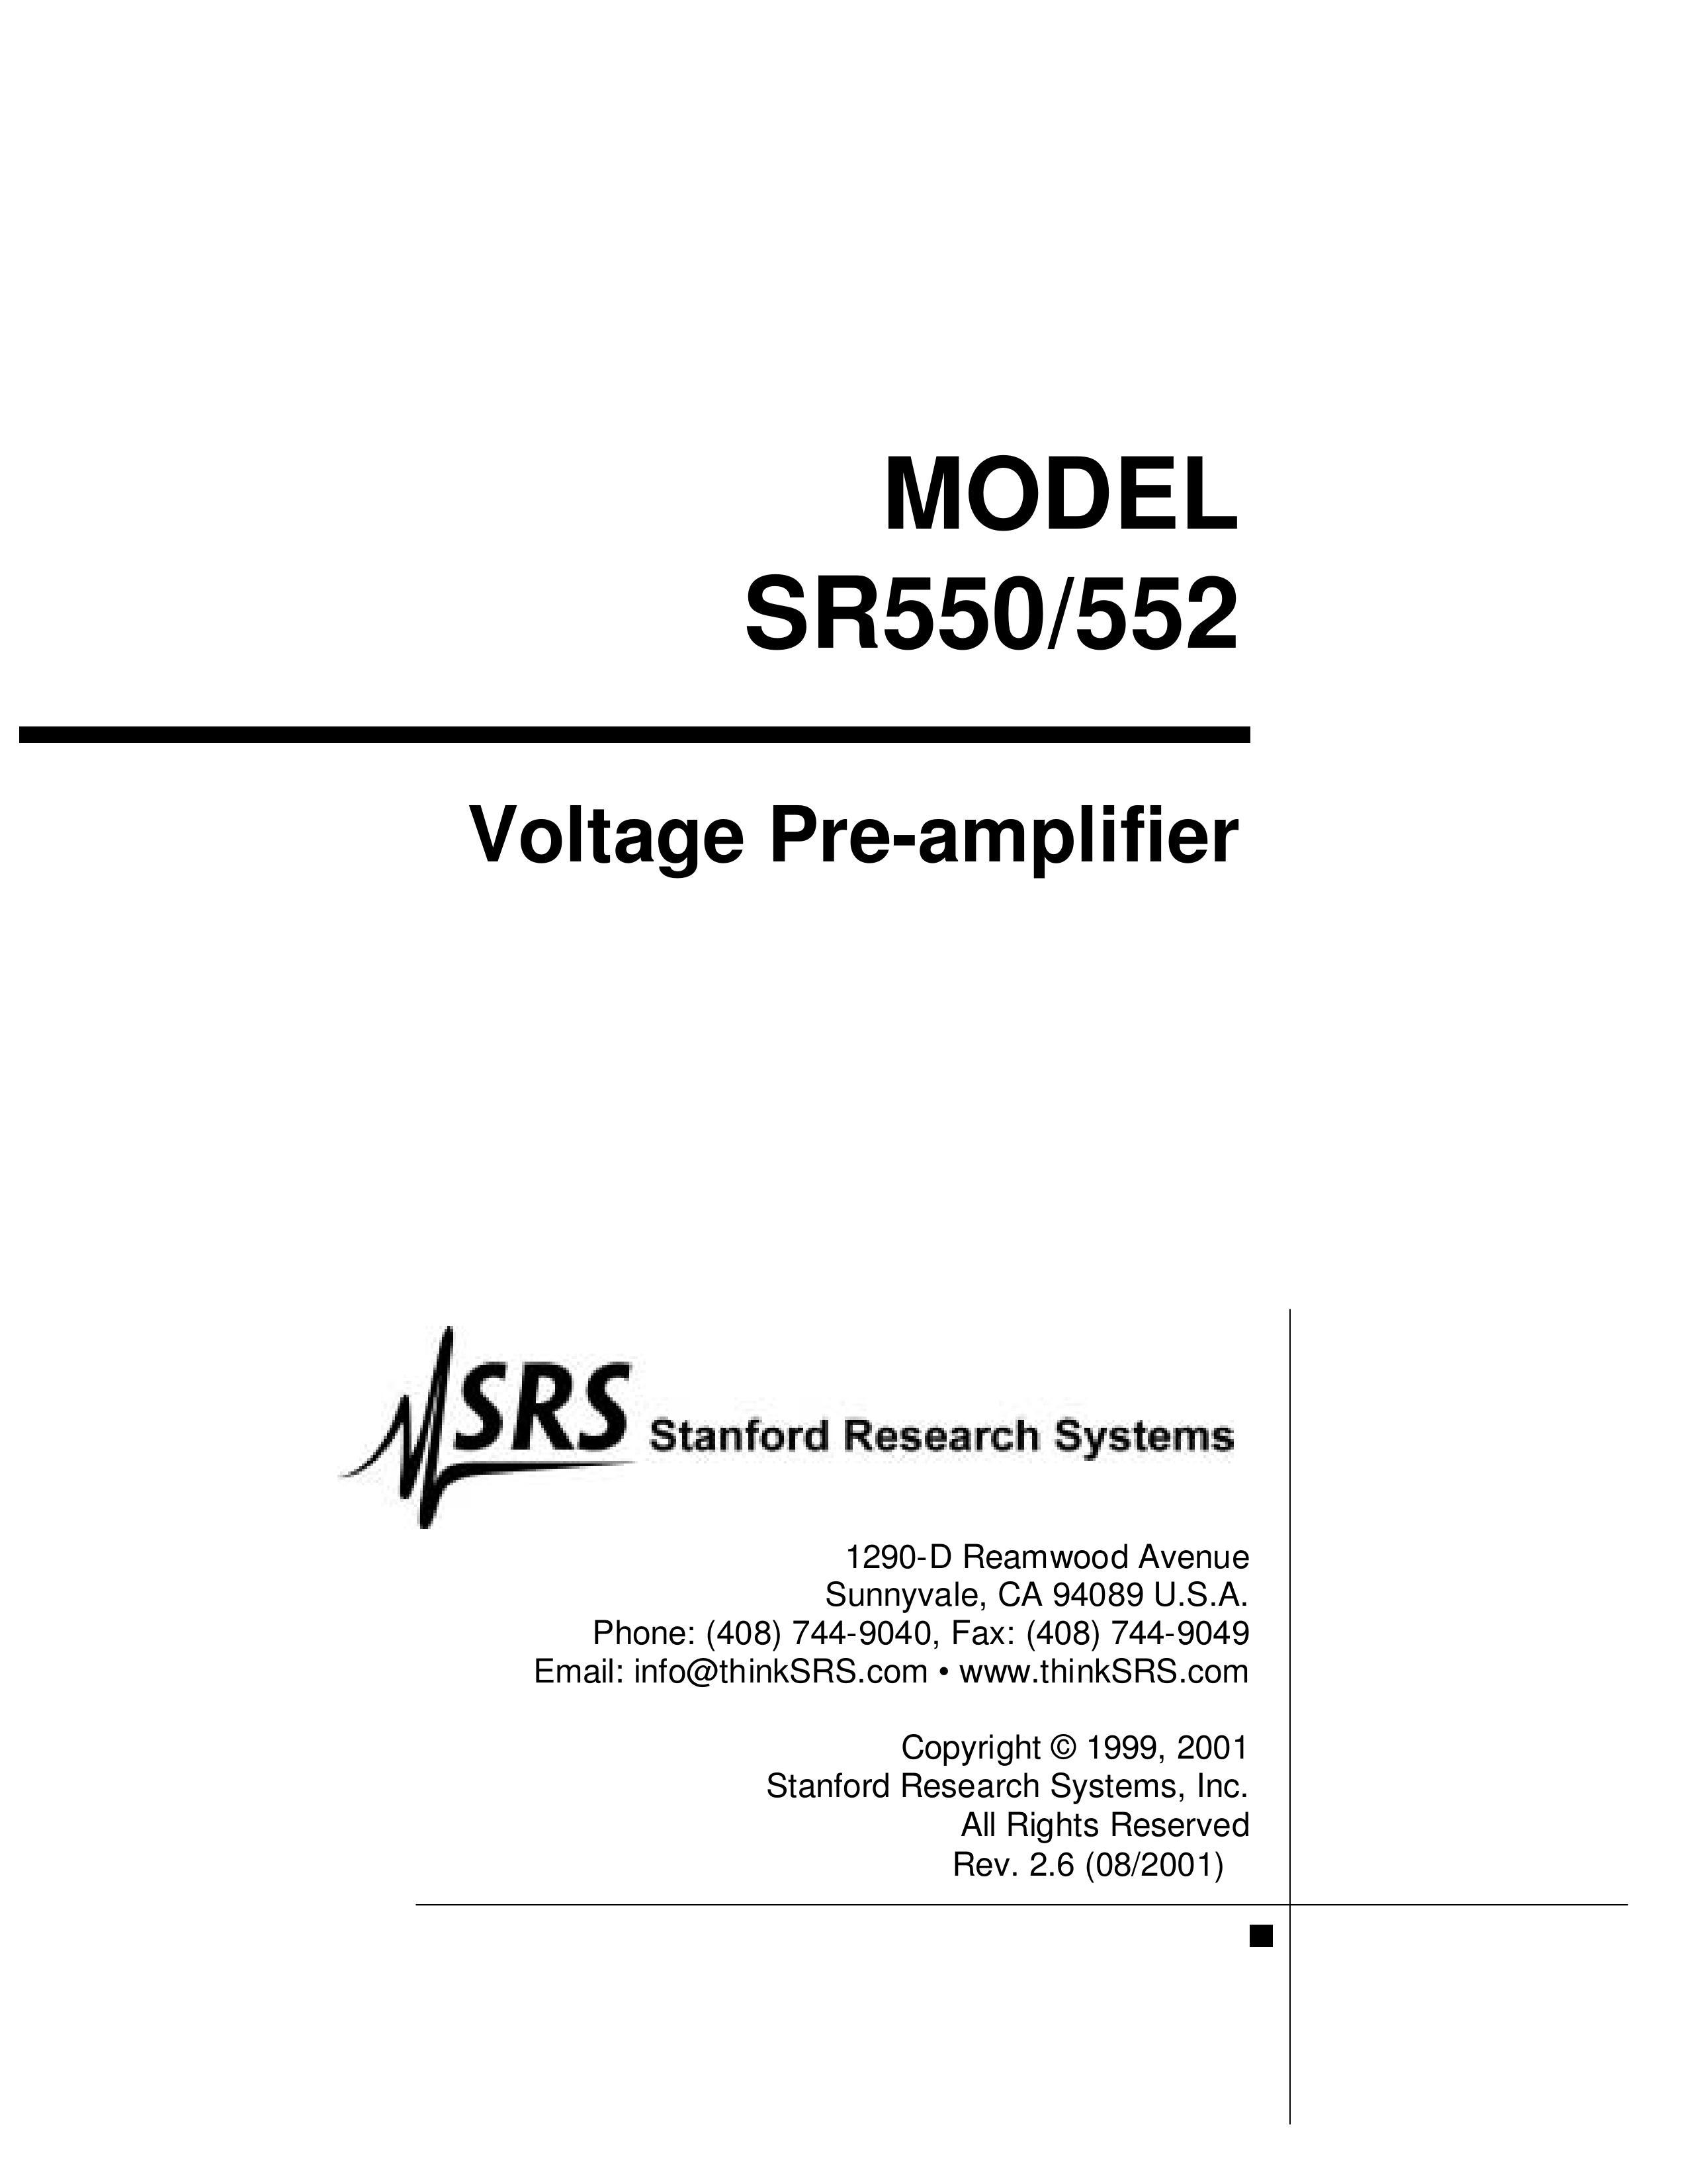 SRS Labs Voltage Pre-amplifier Musical Instrument Amplifier User Manual